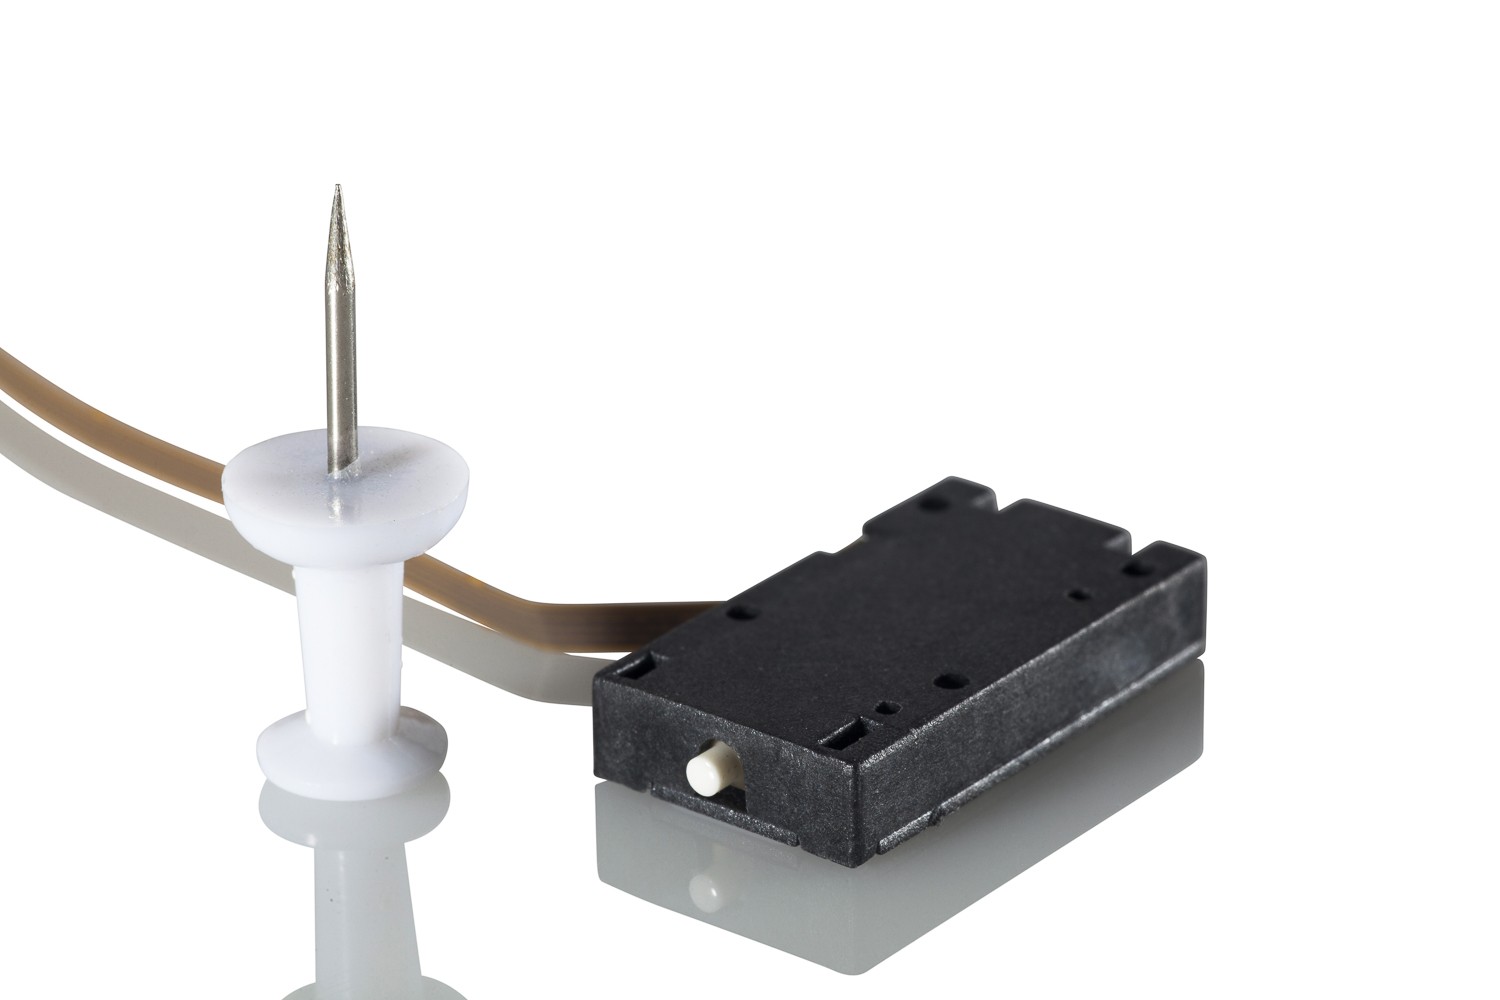 Enhancing Advanced Imaging: Nanomotion’s Piezo Motors in Miniature Gimbals
